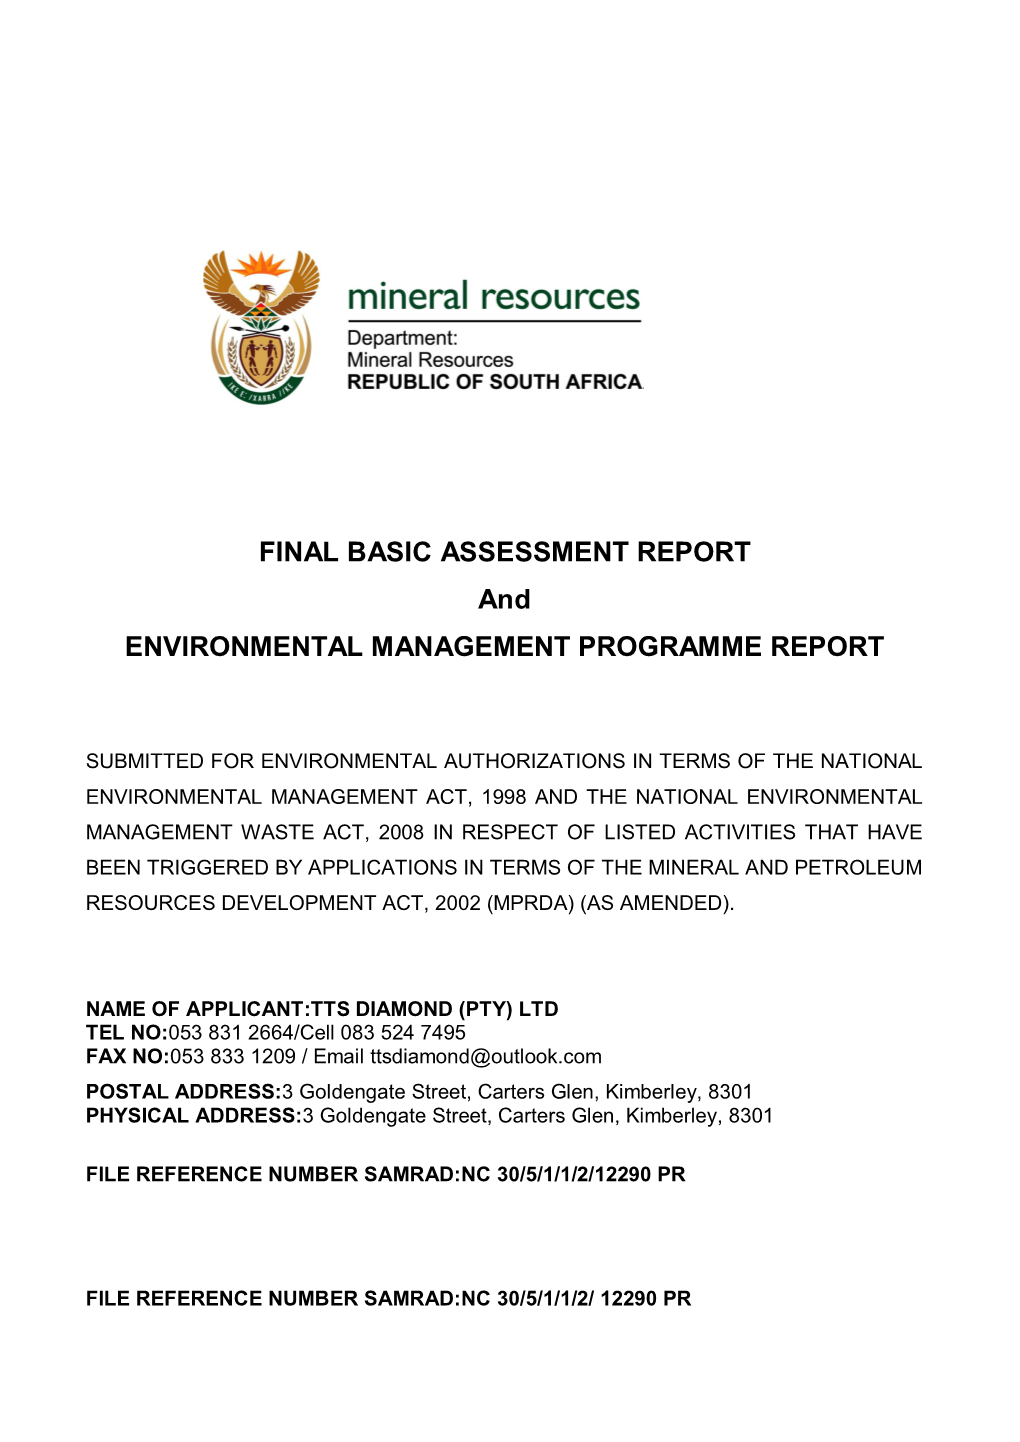 FINAL BASIC ASSESSMENT REPORT and ENVIRONMENTAL MANAGEMENT PROGRAMME REPORT